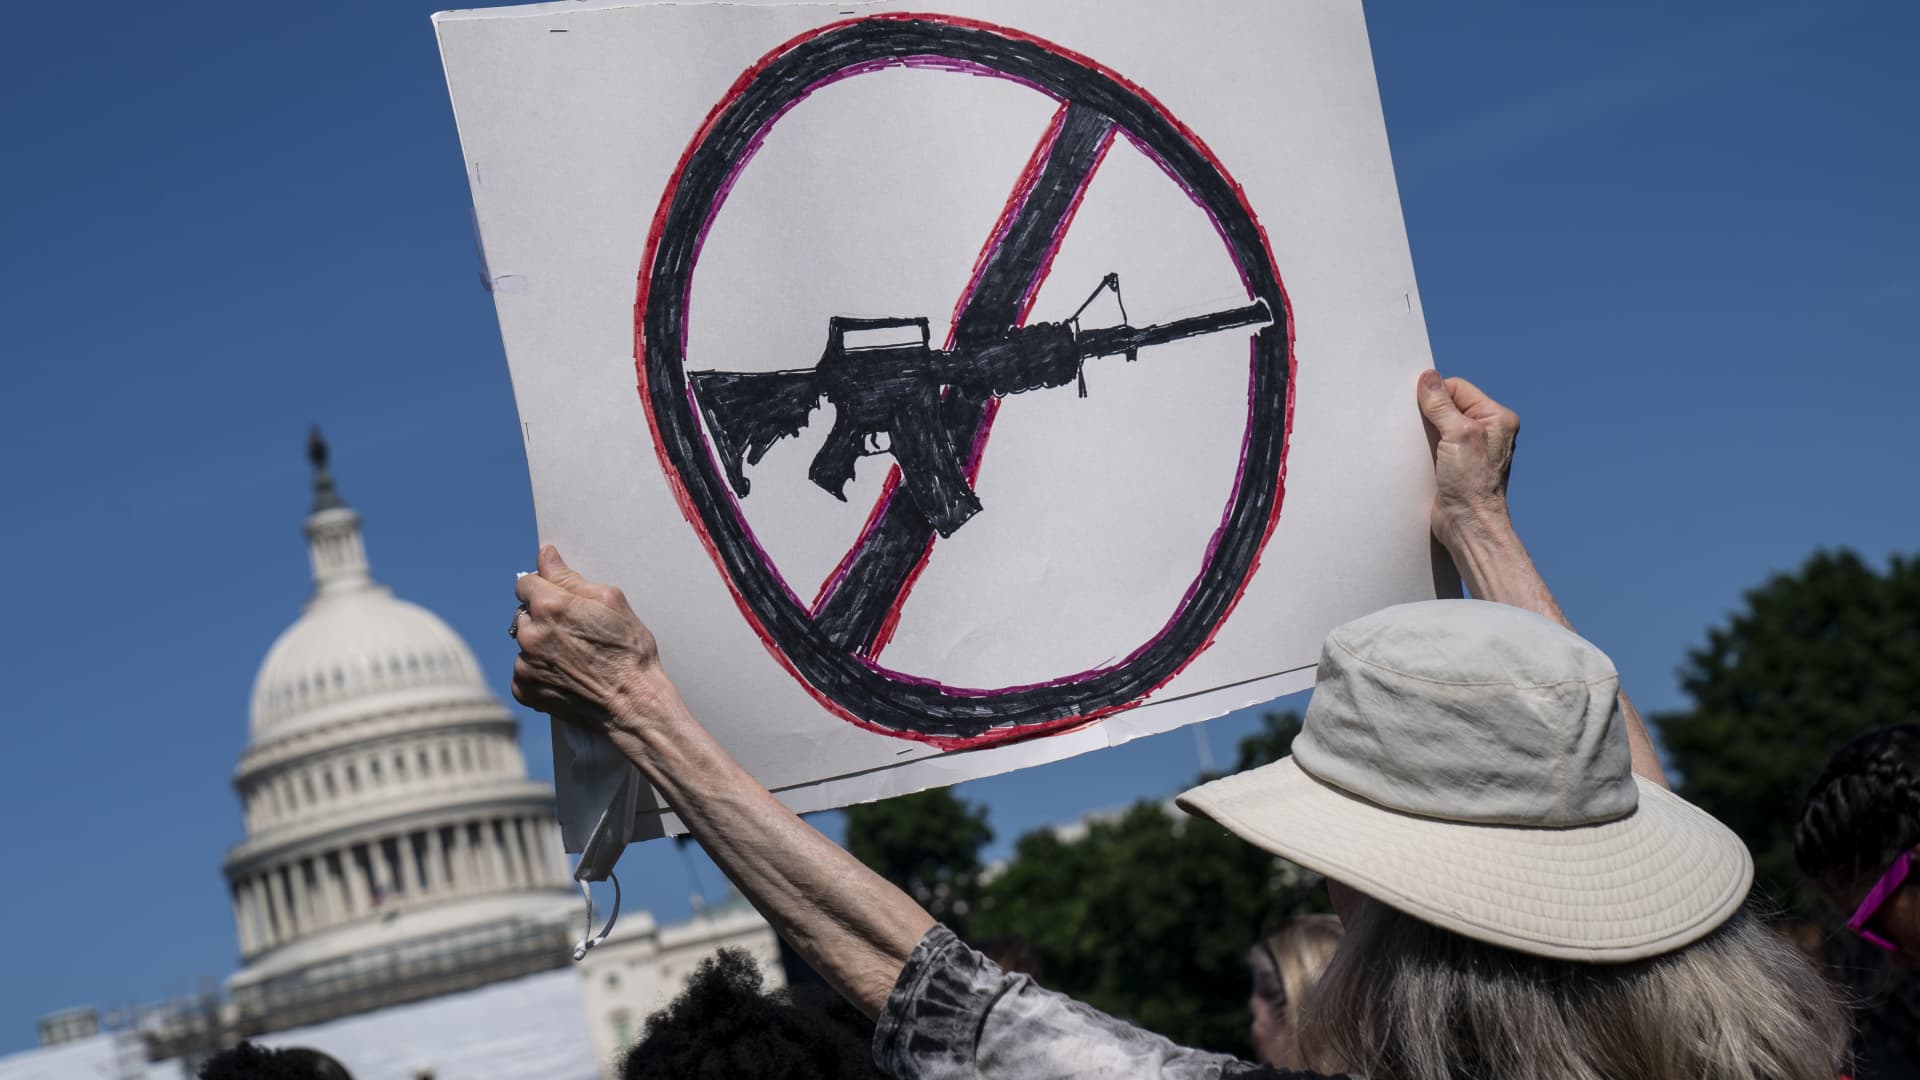 Senate negotiators reach framework deal on bipartisan gun package